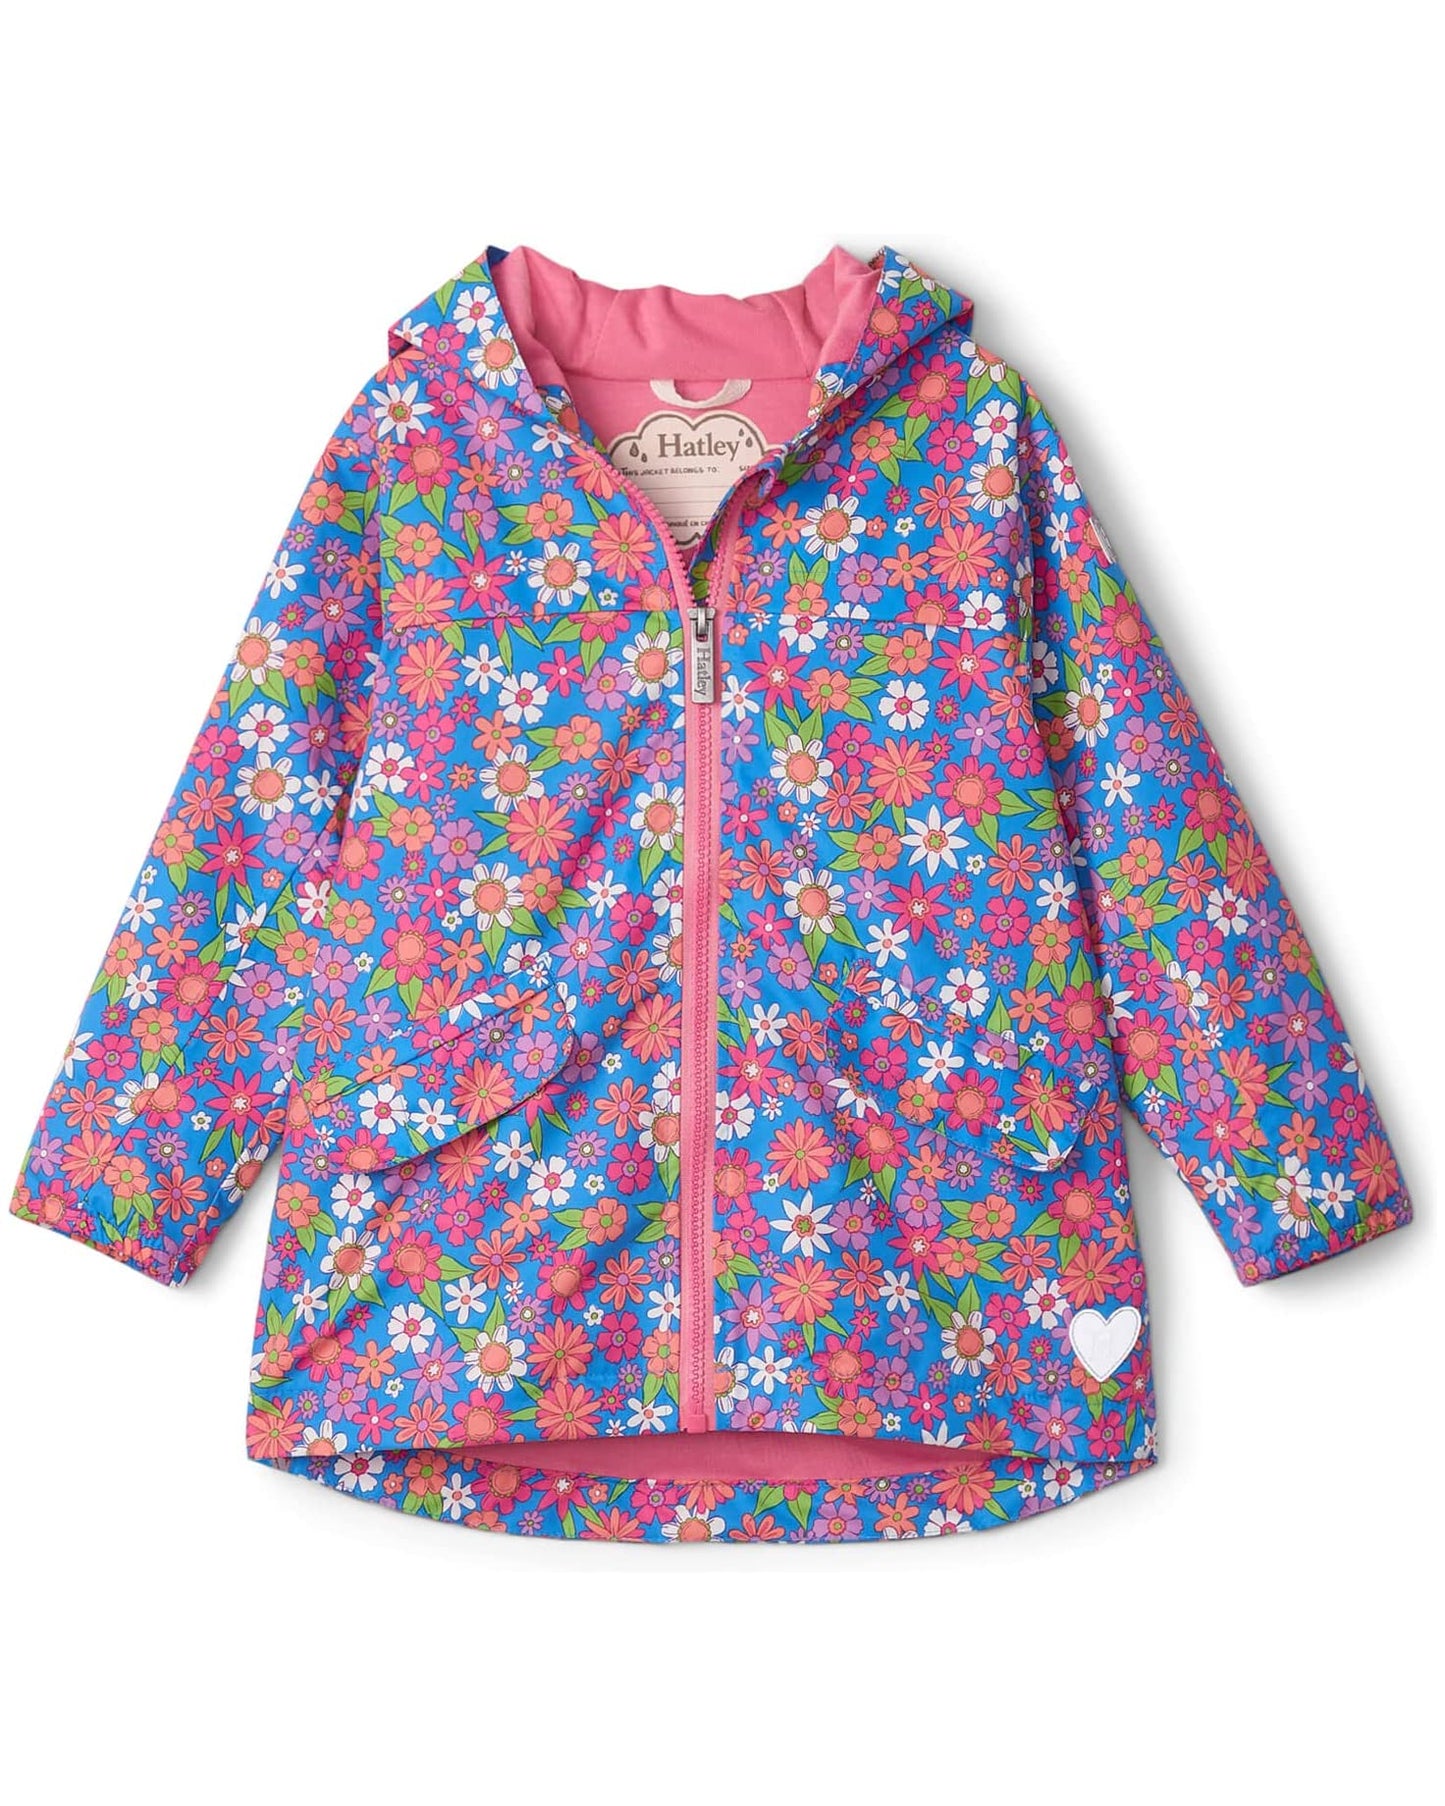 Hatley girls retro floral microfiber rain coat